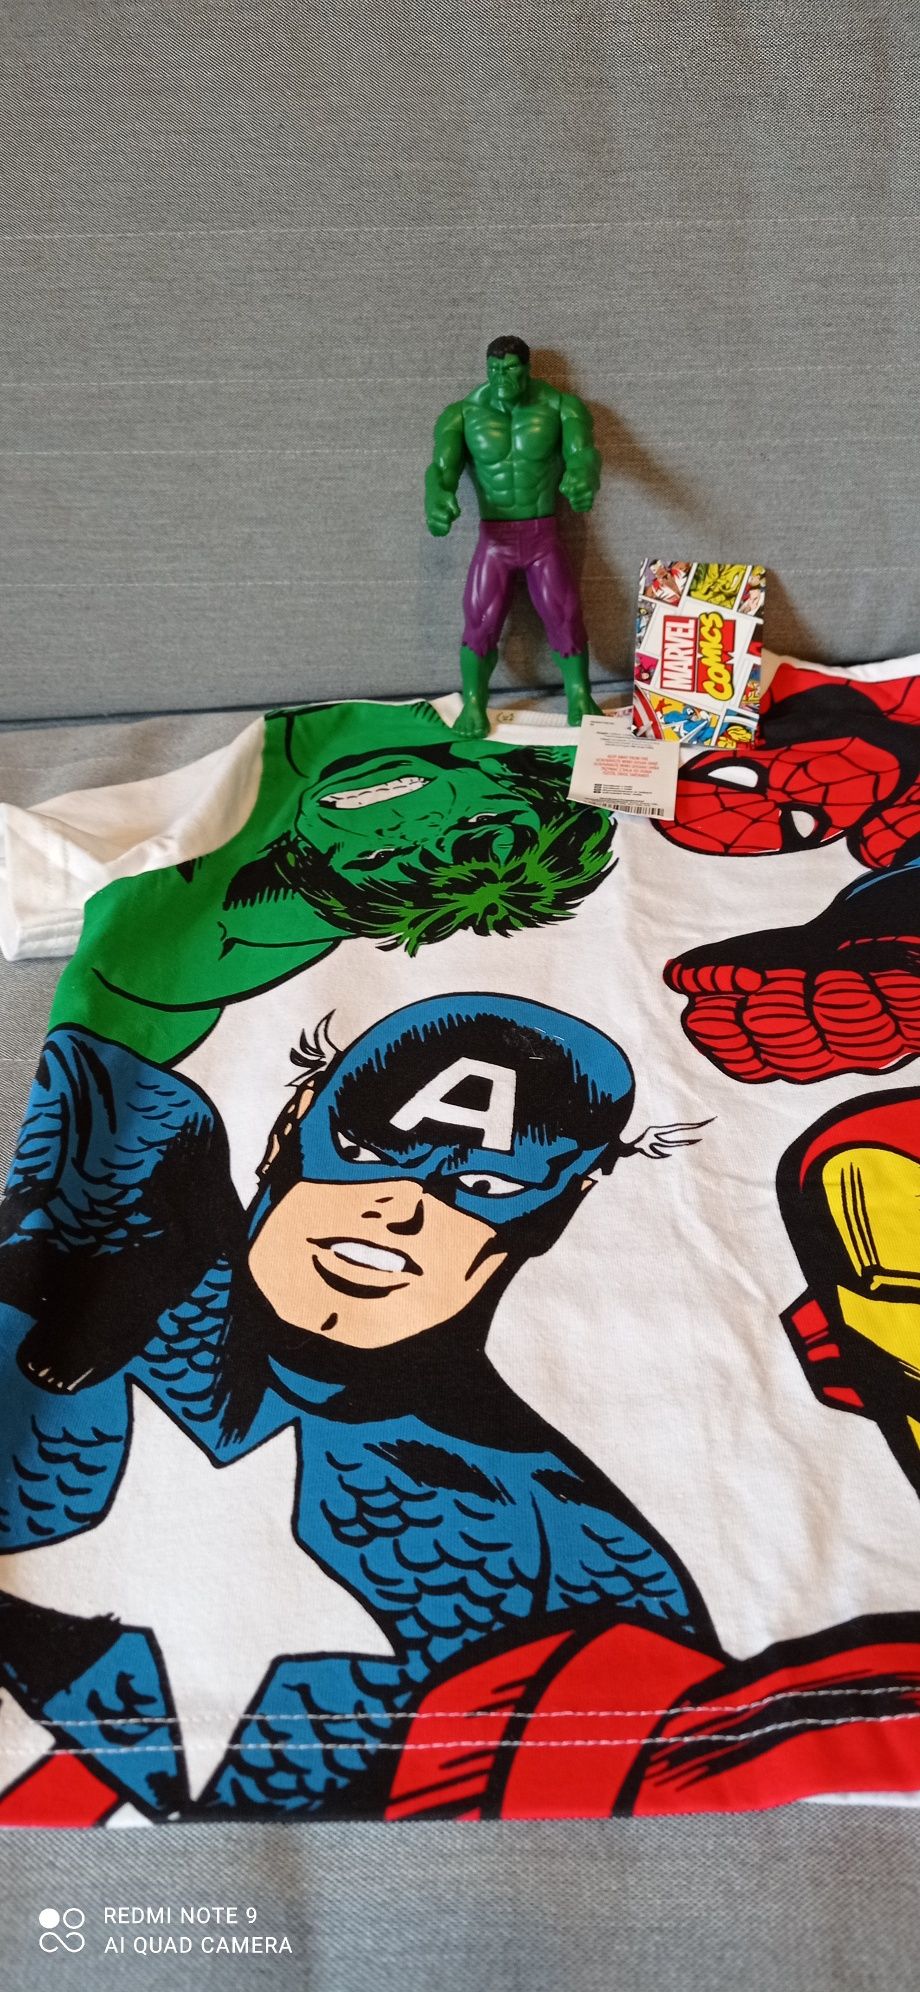 Koszulka nowa Marwel Hulk Spiderman Ironman figurka Hulk